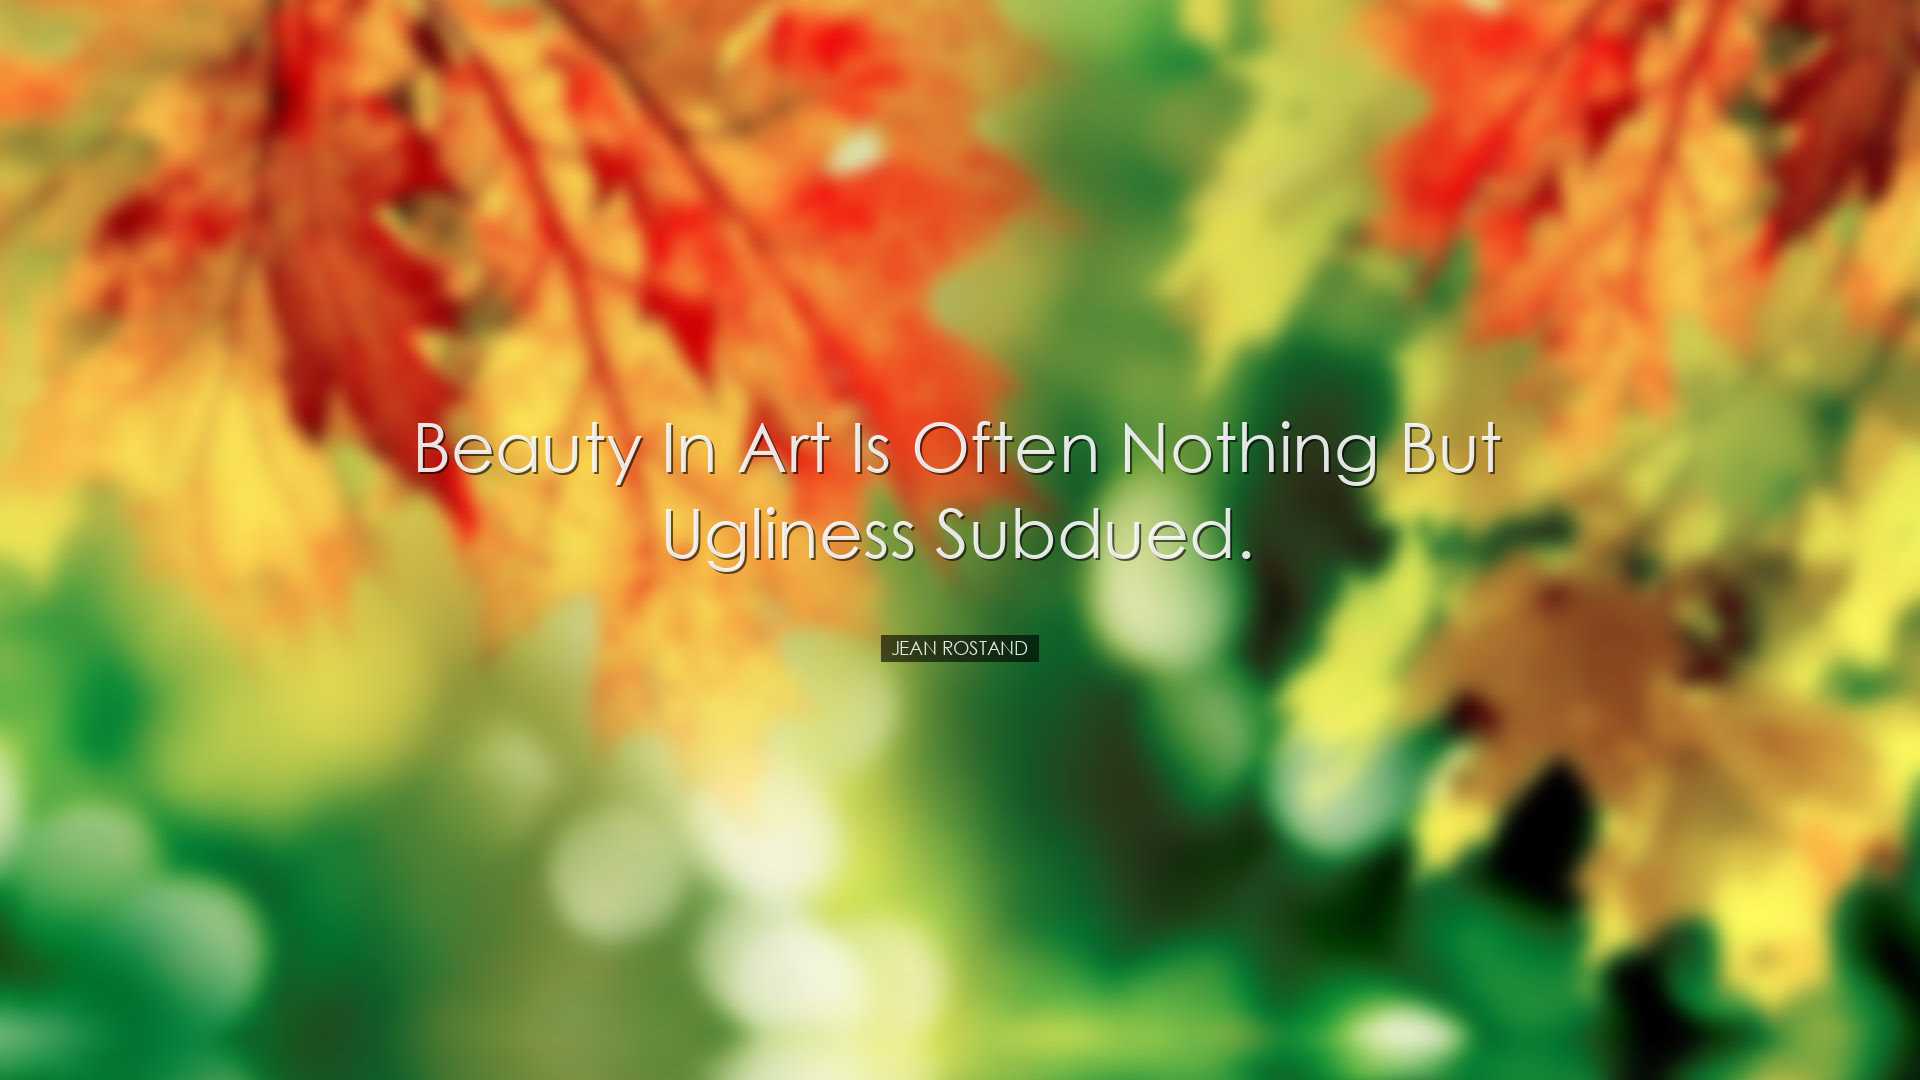 Beauty in art is often nothing but ugliness subdued. - Jean Rostan